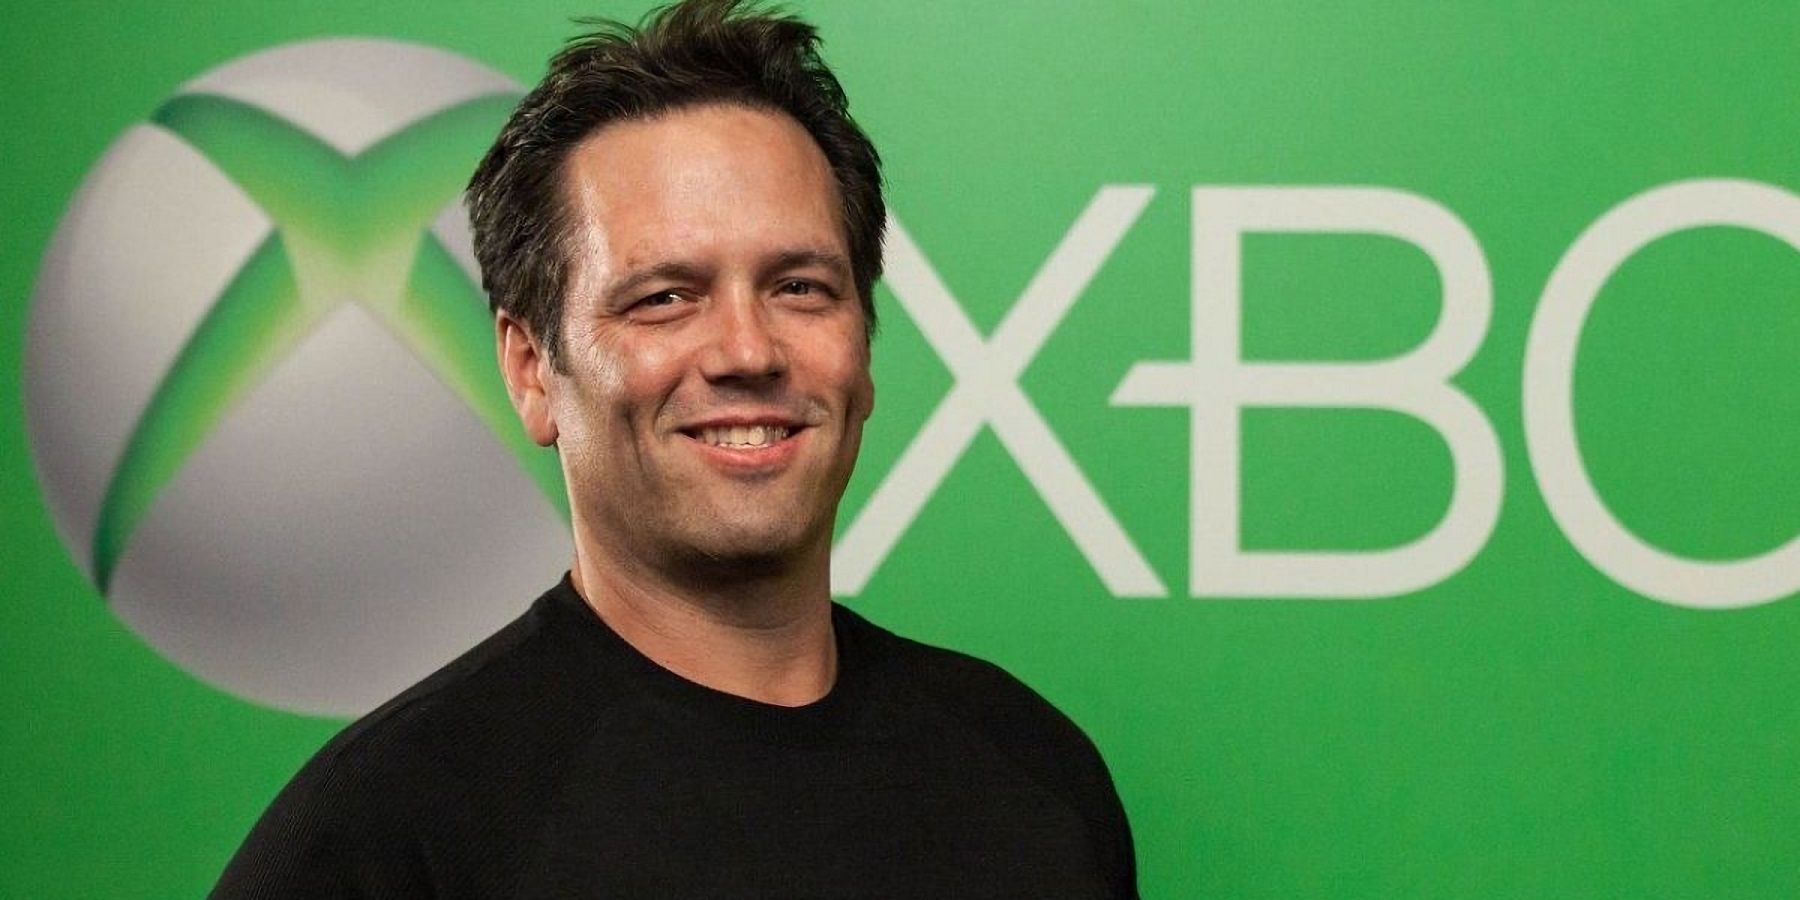 Phil-Spencer-Xbox-Logo-Background-New-Fixed